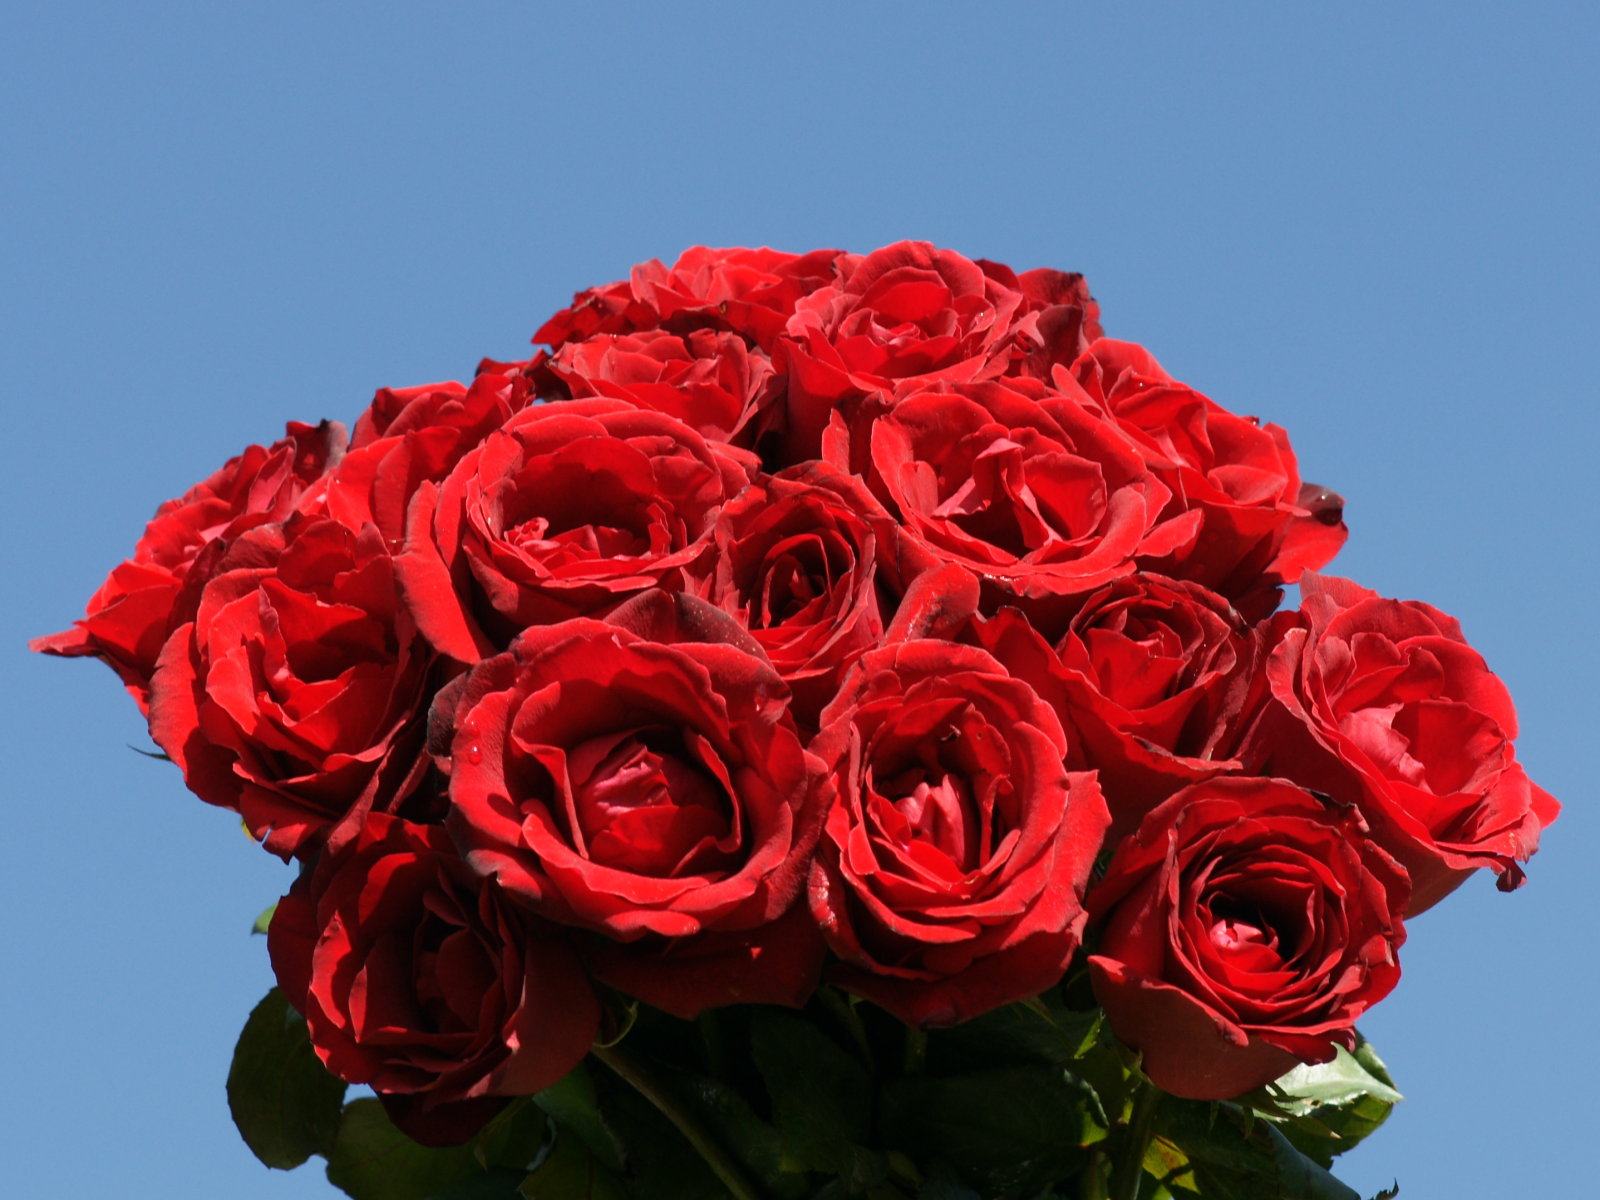 red rose live wallpaper free download,flower,rose,garden roses,flowering plant,red